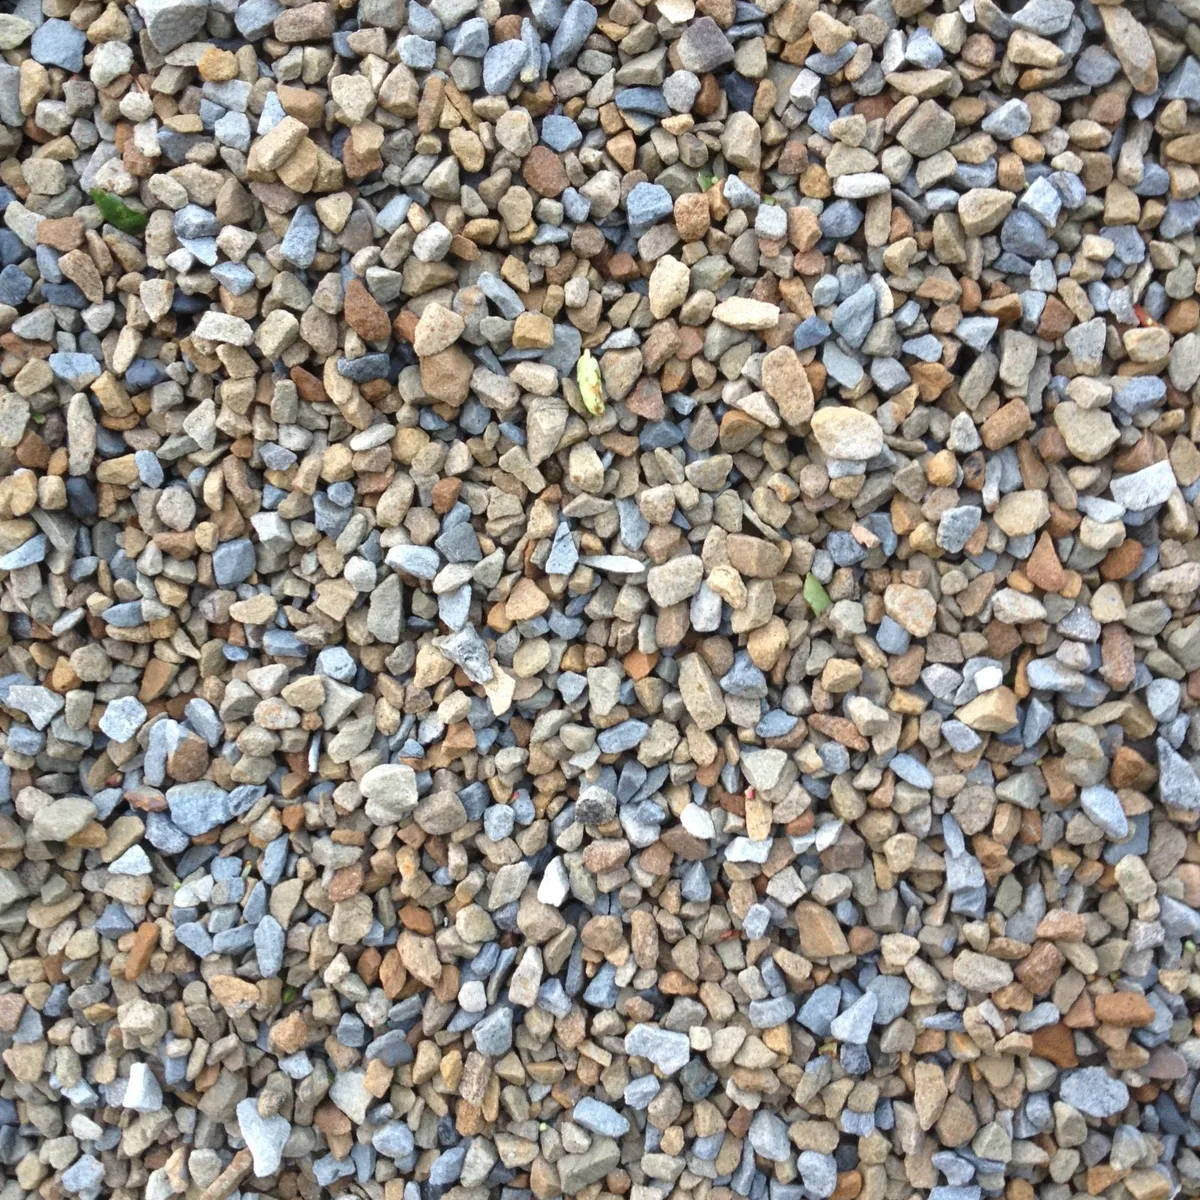 sand / gravel /coloured pebbles / stone - Image 1